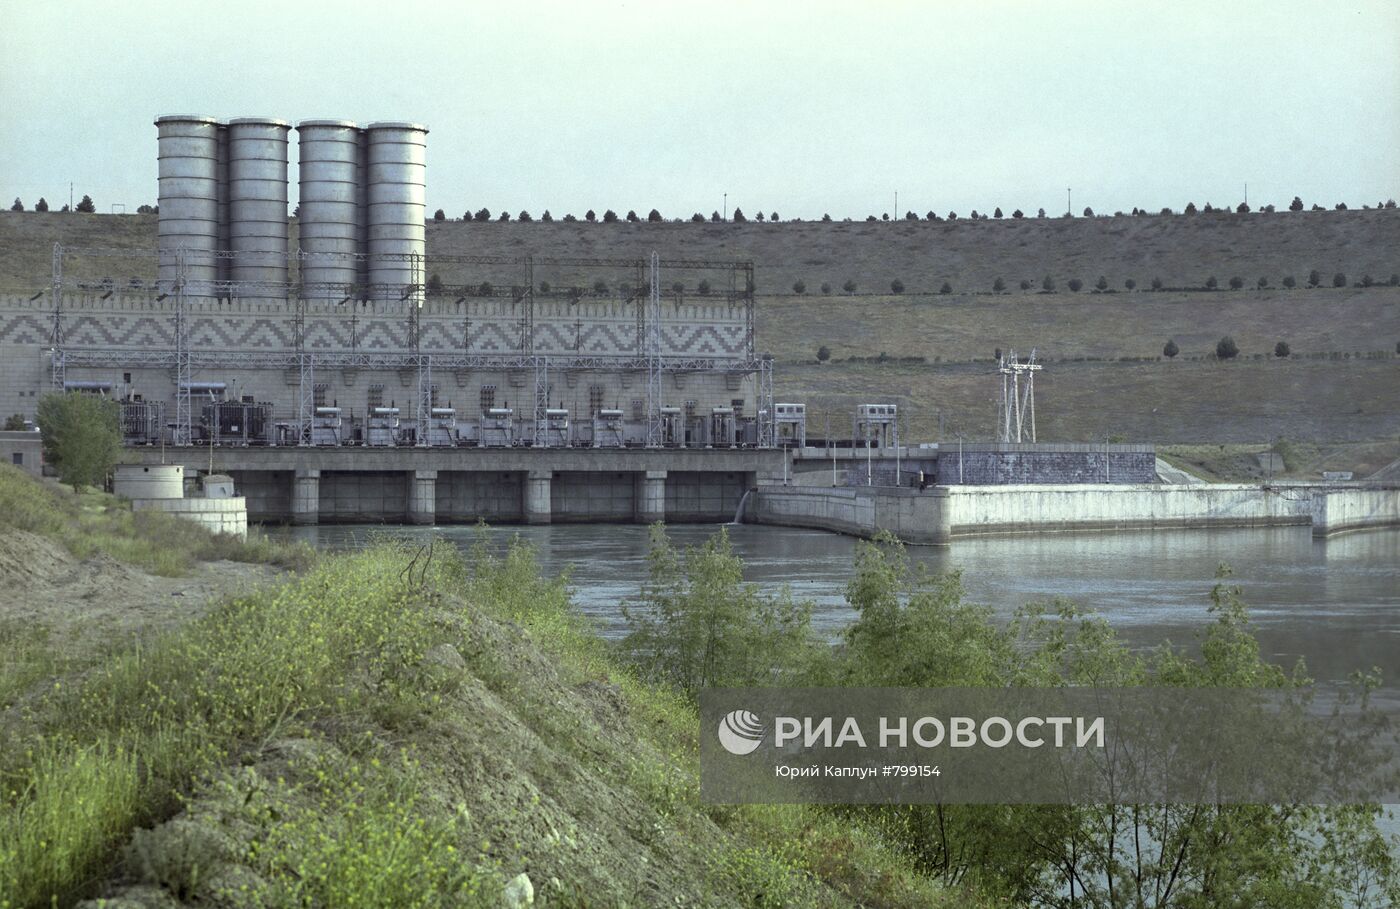 Мингечаурская ГЭС